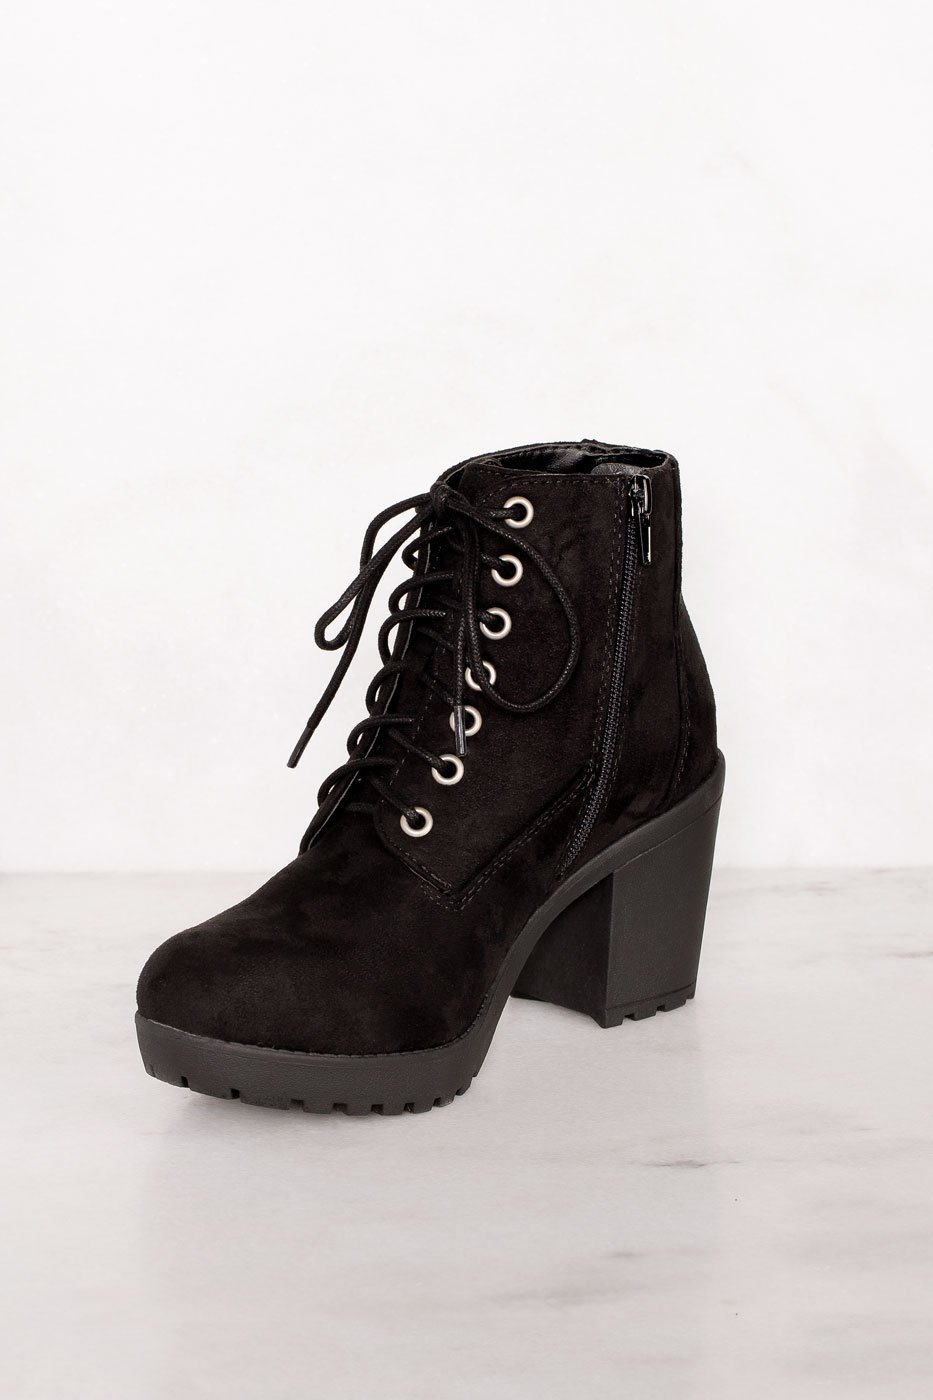 black bootie heels with laces